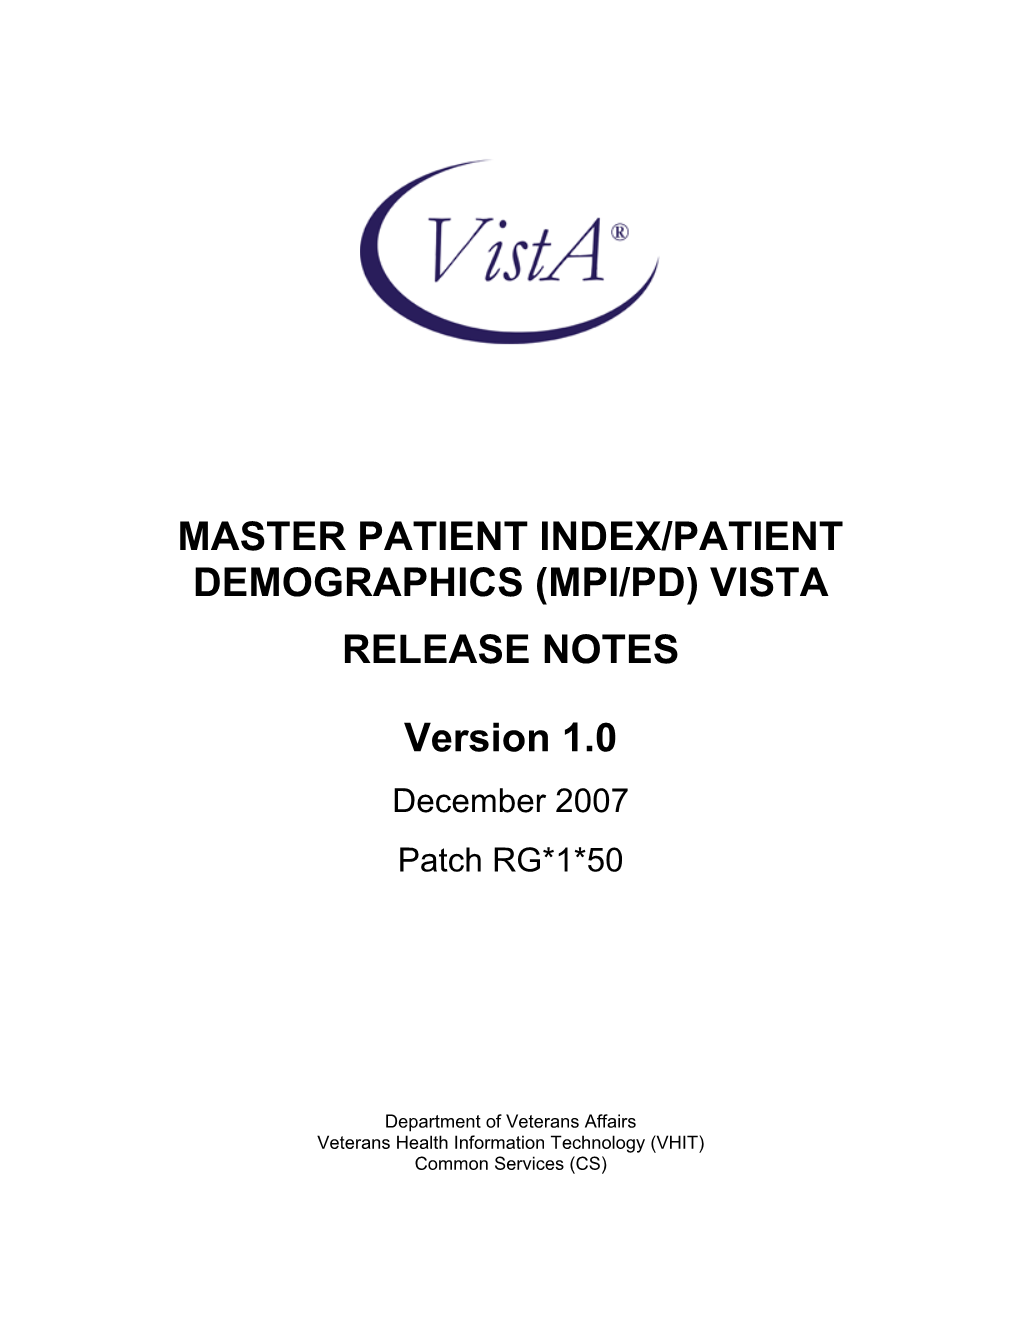 Master Patient Index/Patient Demographics Release Notes (Department of Veterans Affairs)